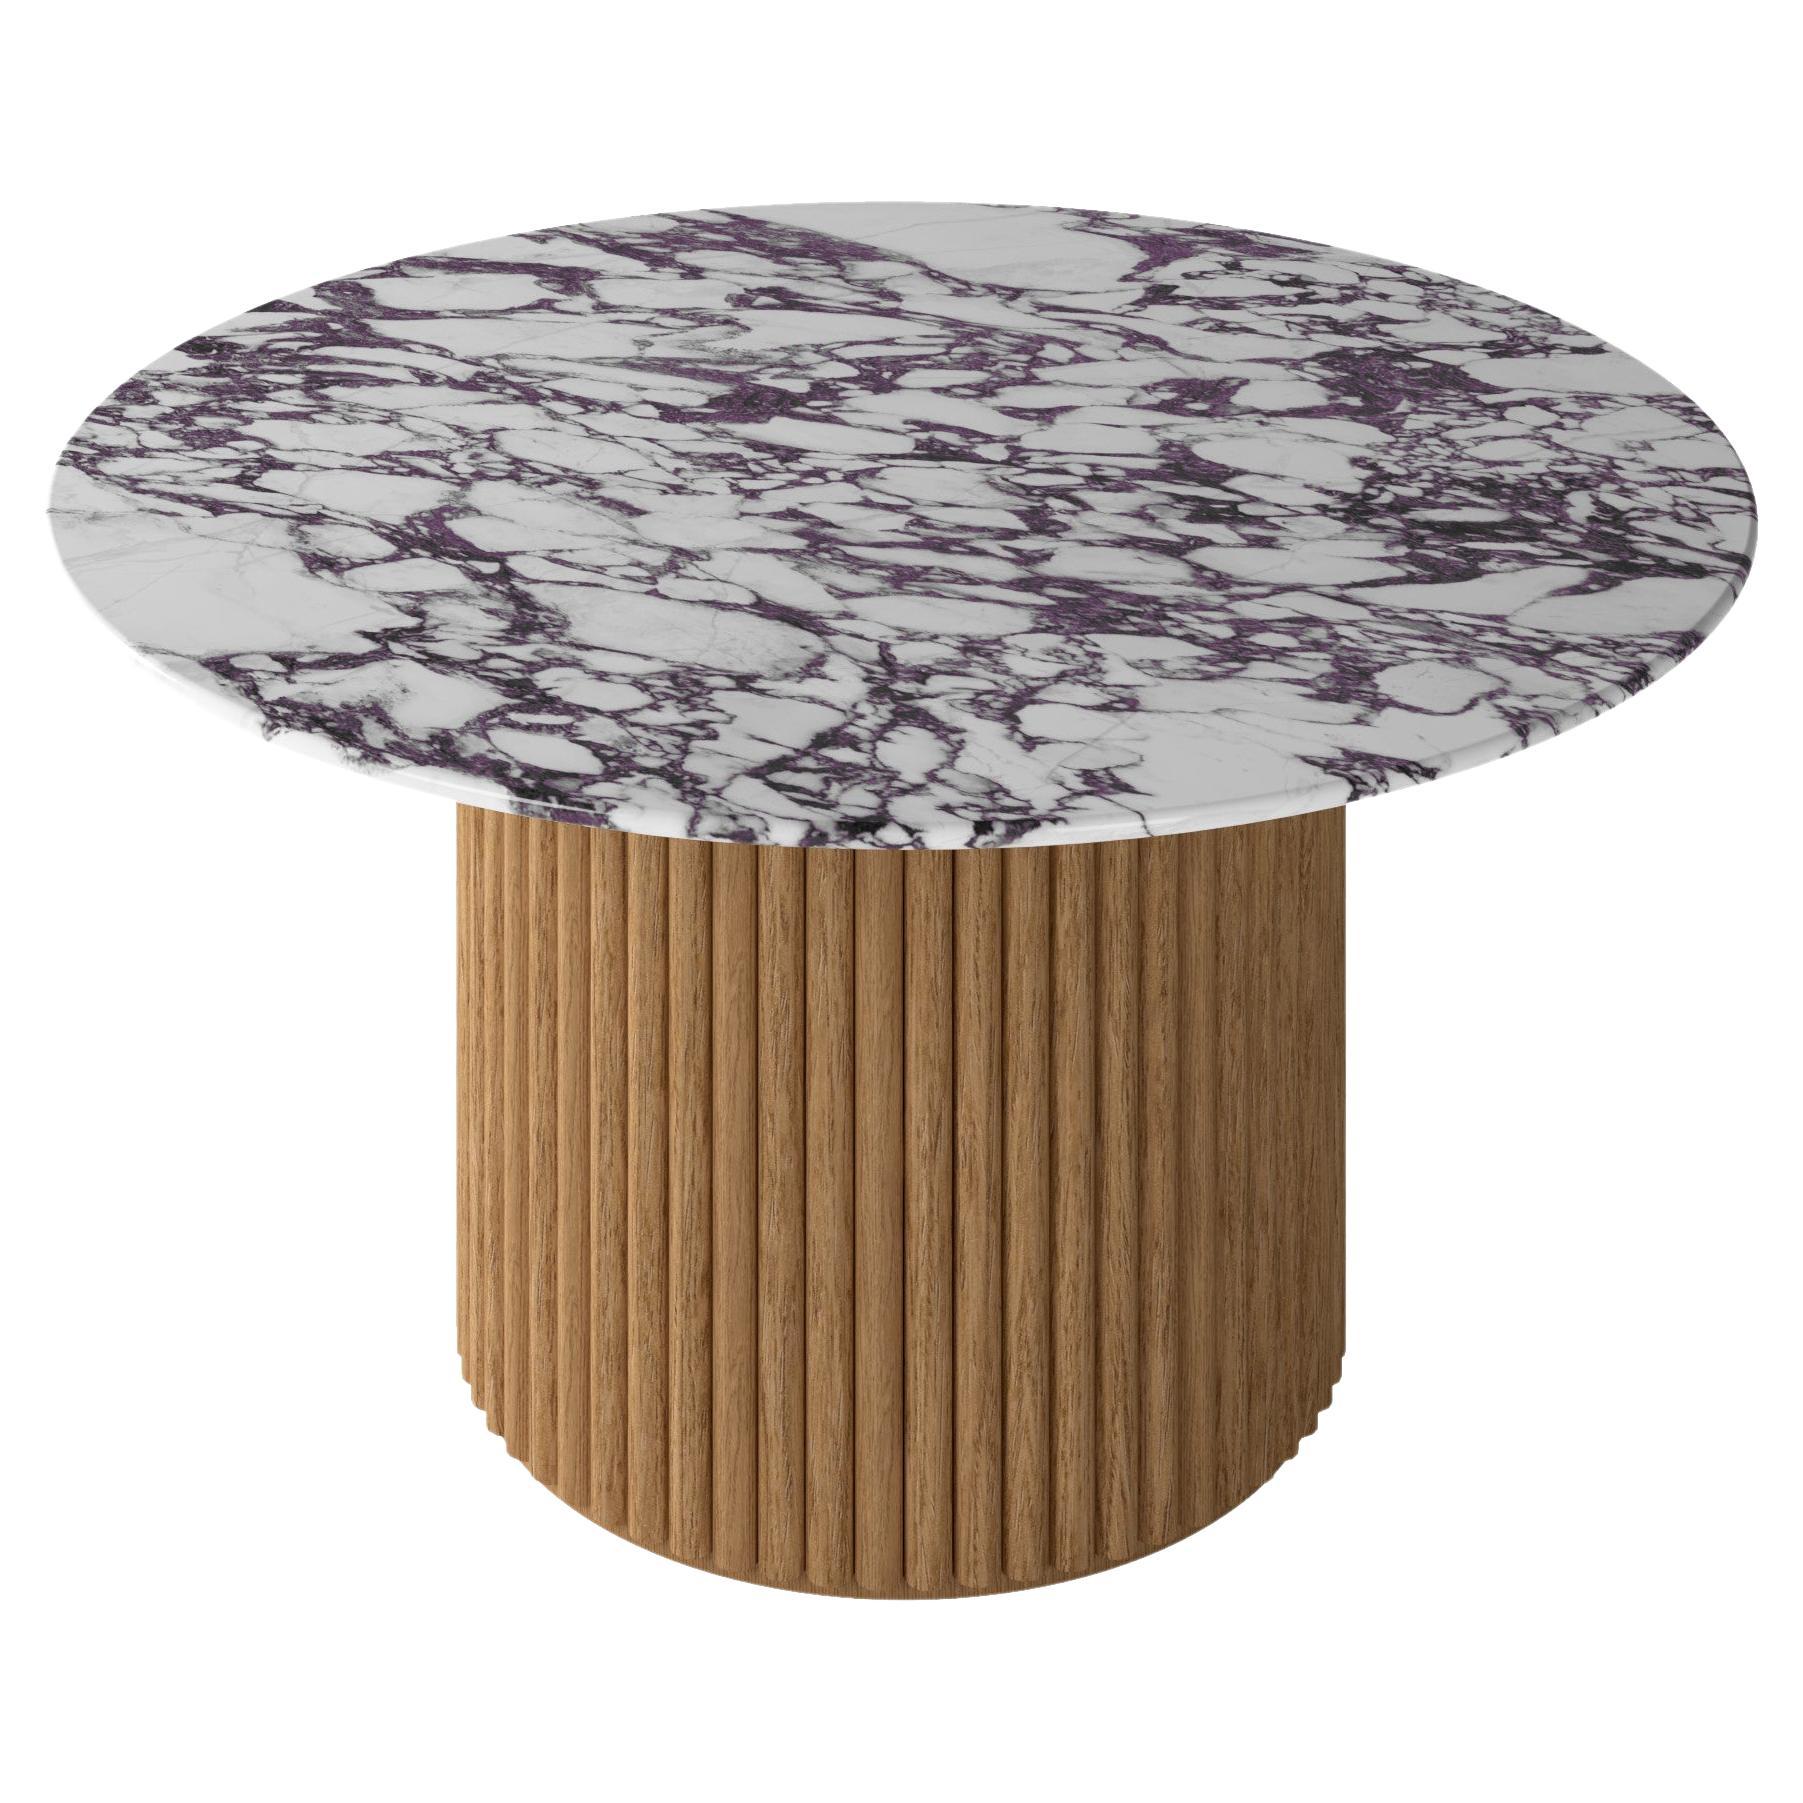 Table de salle à manger Mette, marbre Calacatta viola italien, design moderne danois